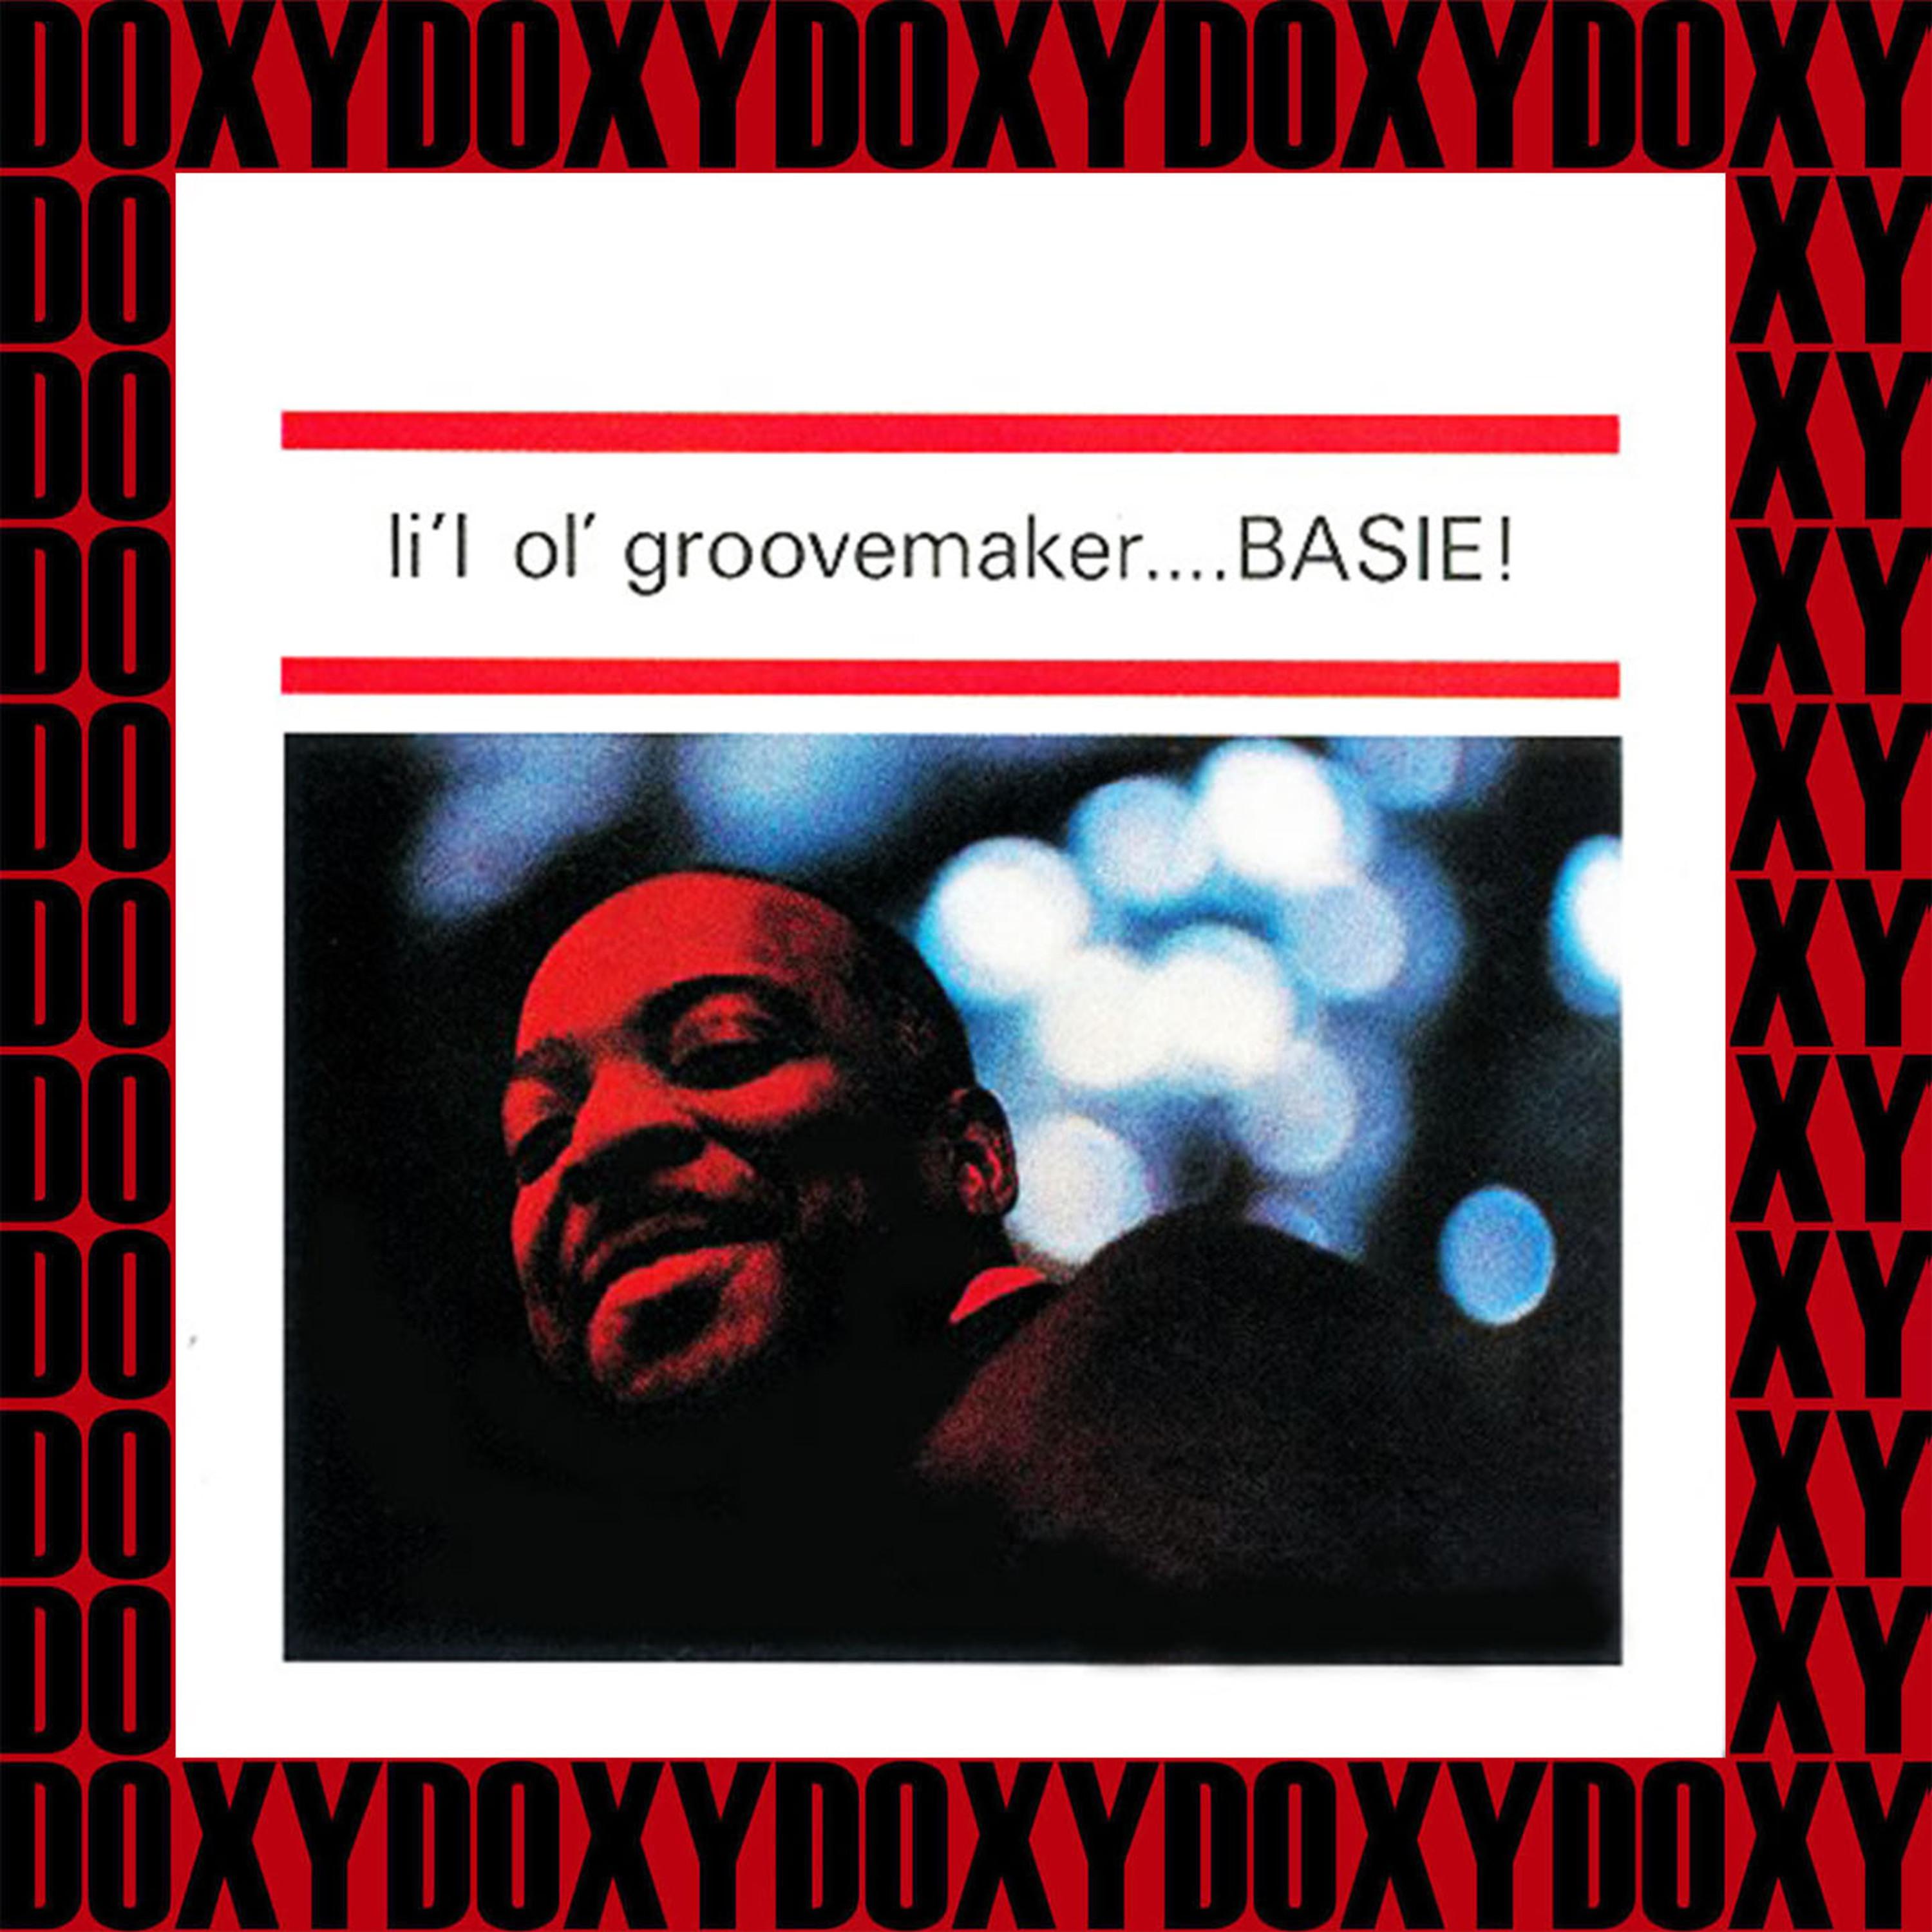 Li'l Ol' Groovemaker ... Basie! (Remastered Version)